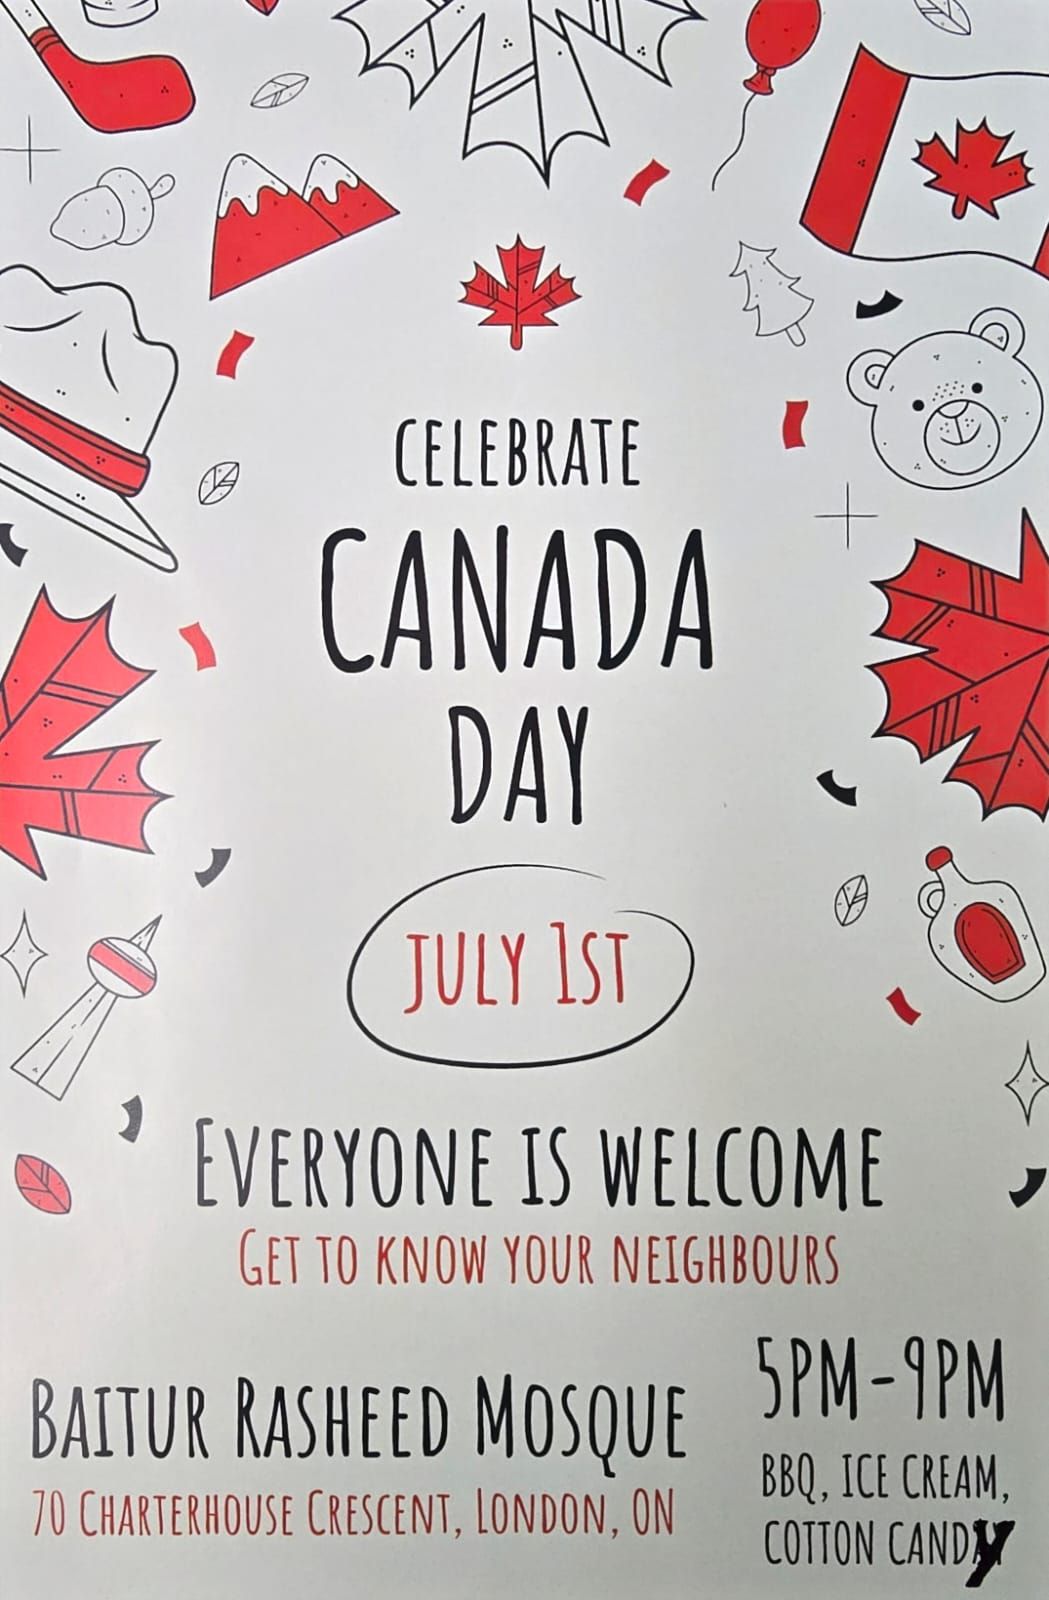 AMJ celebrates Canada Day